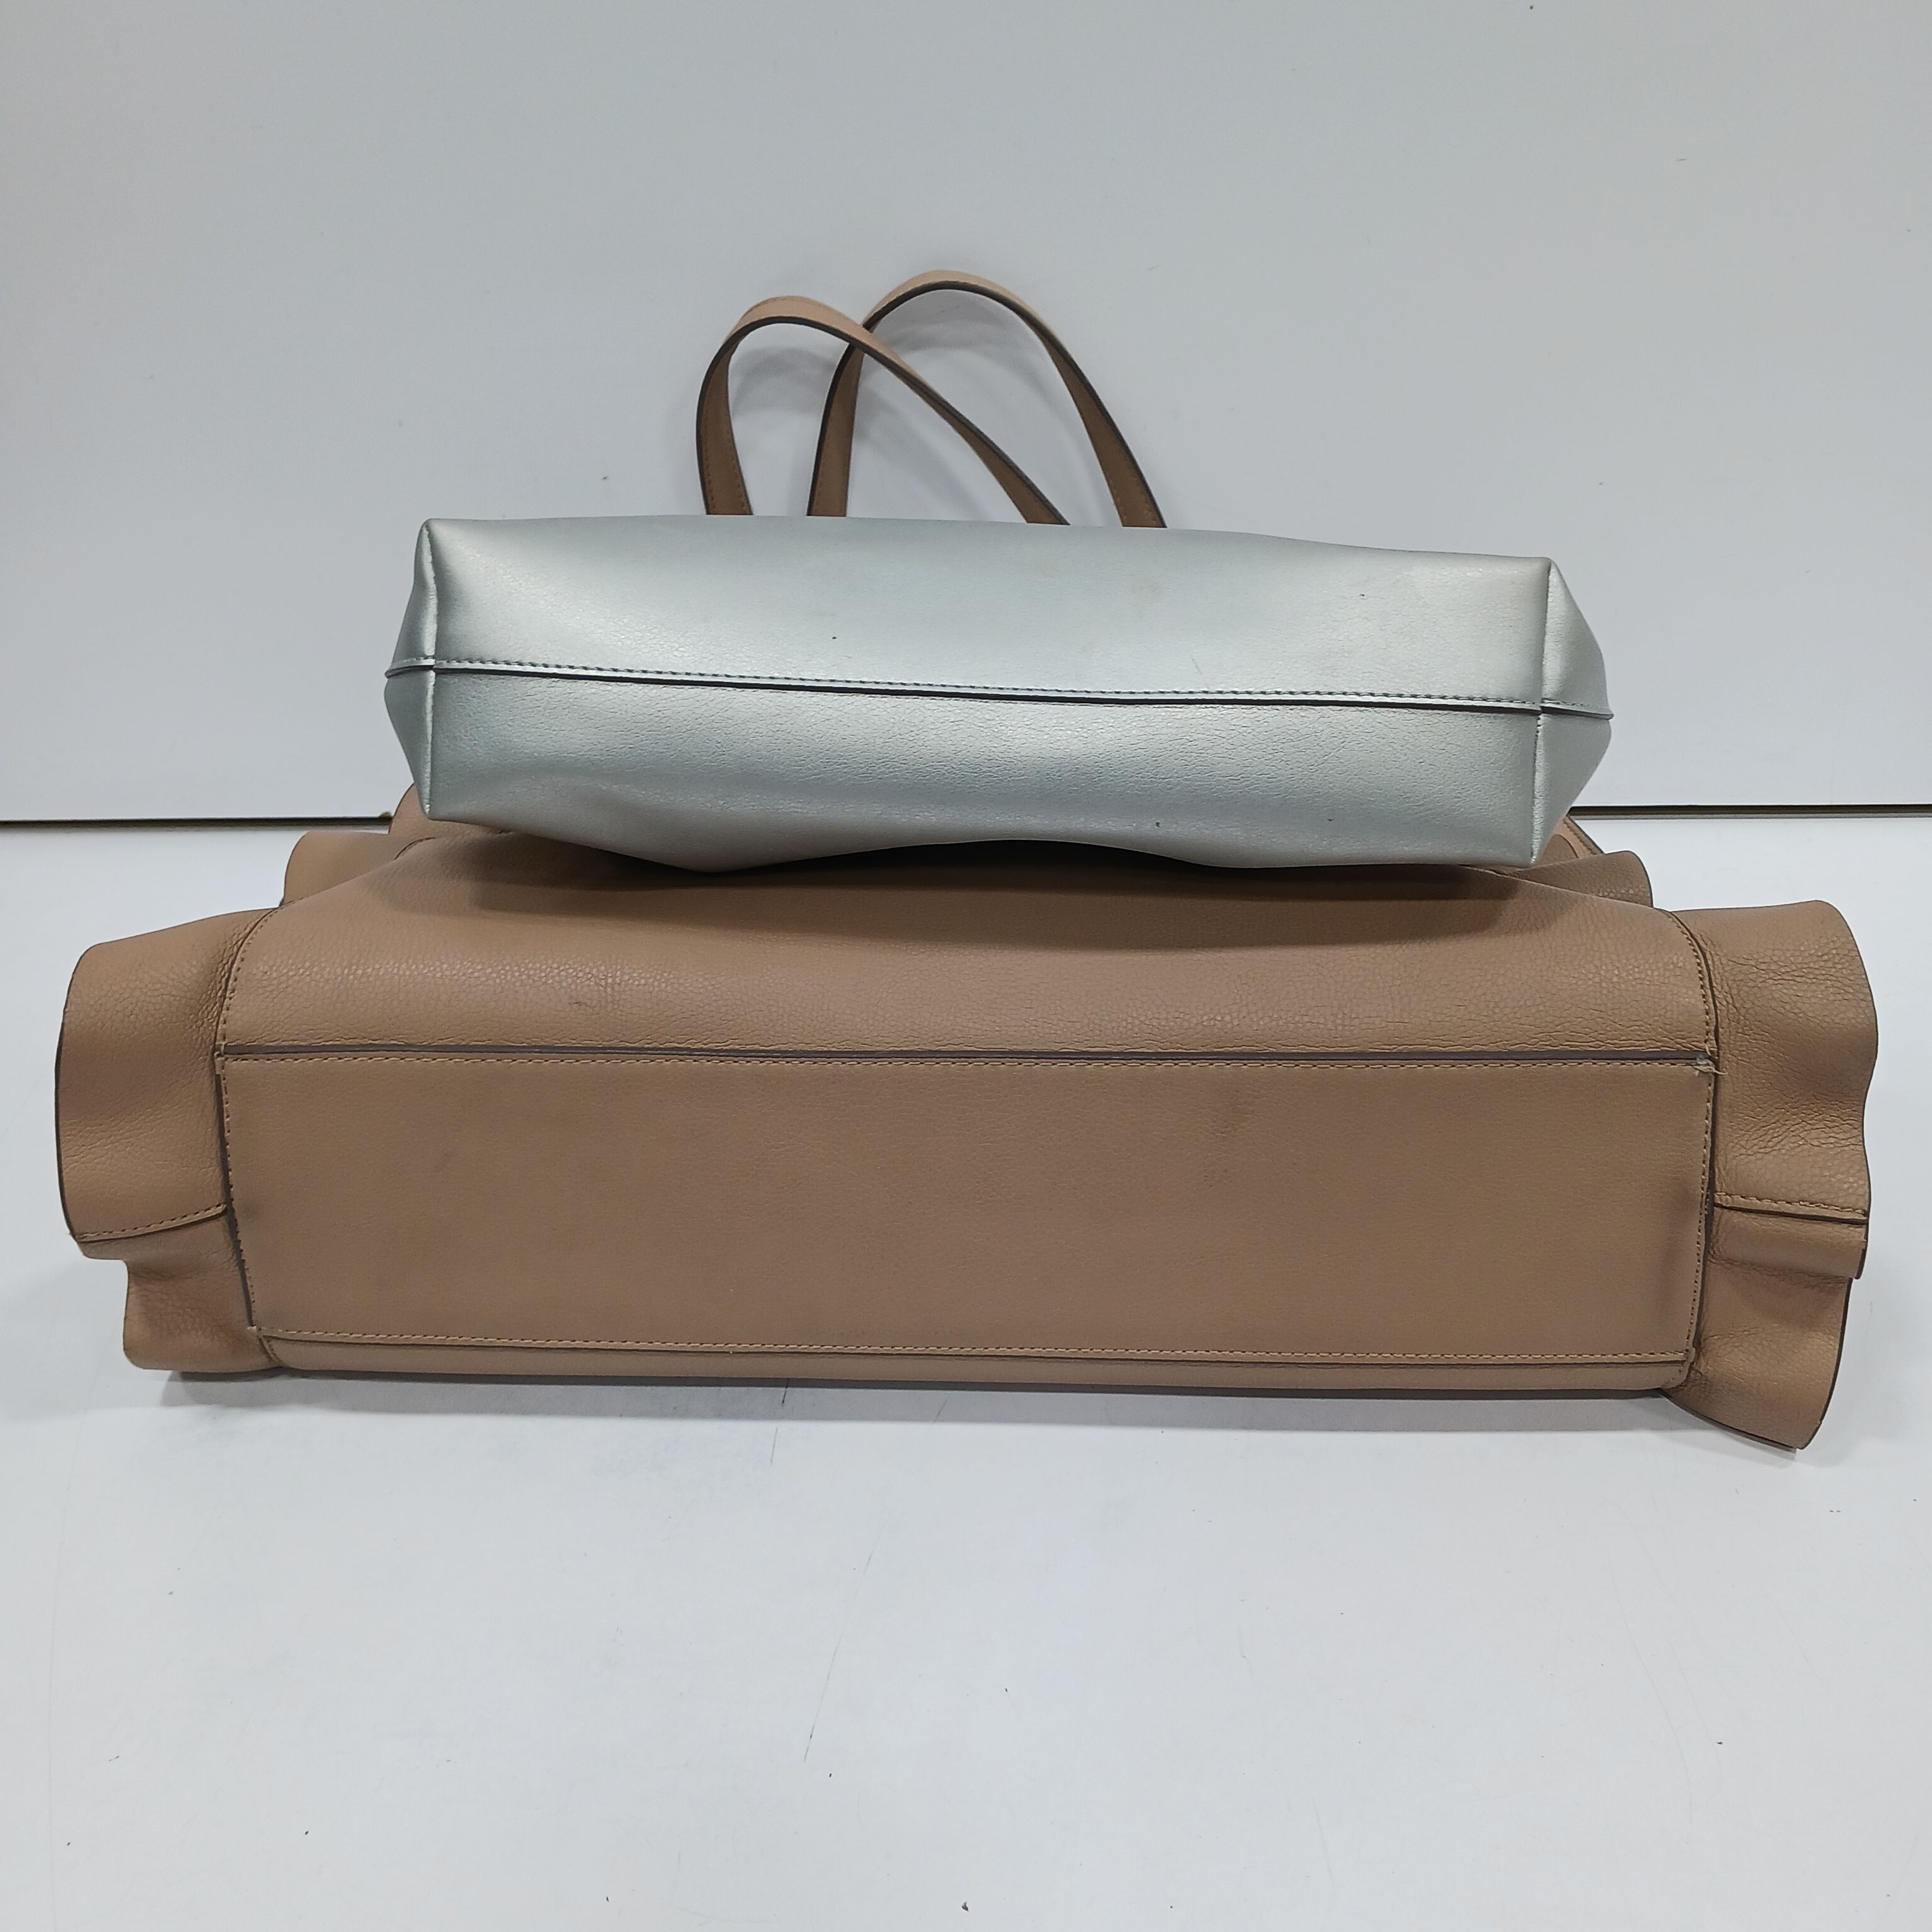 Leather Handbags - Crossbody, Bucket, Hobo – Strandbags Australia